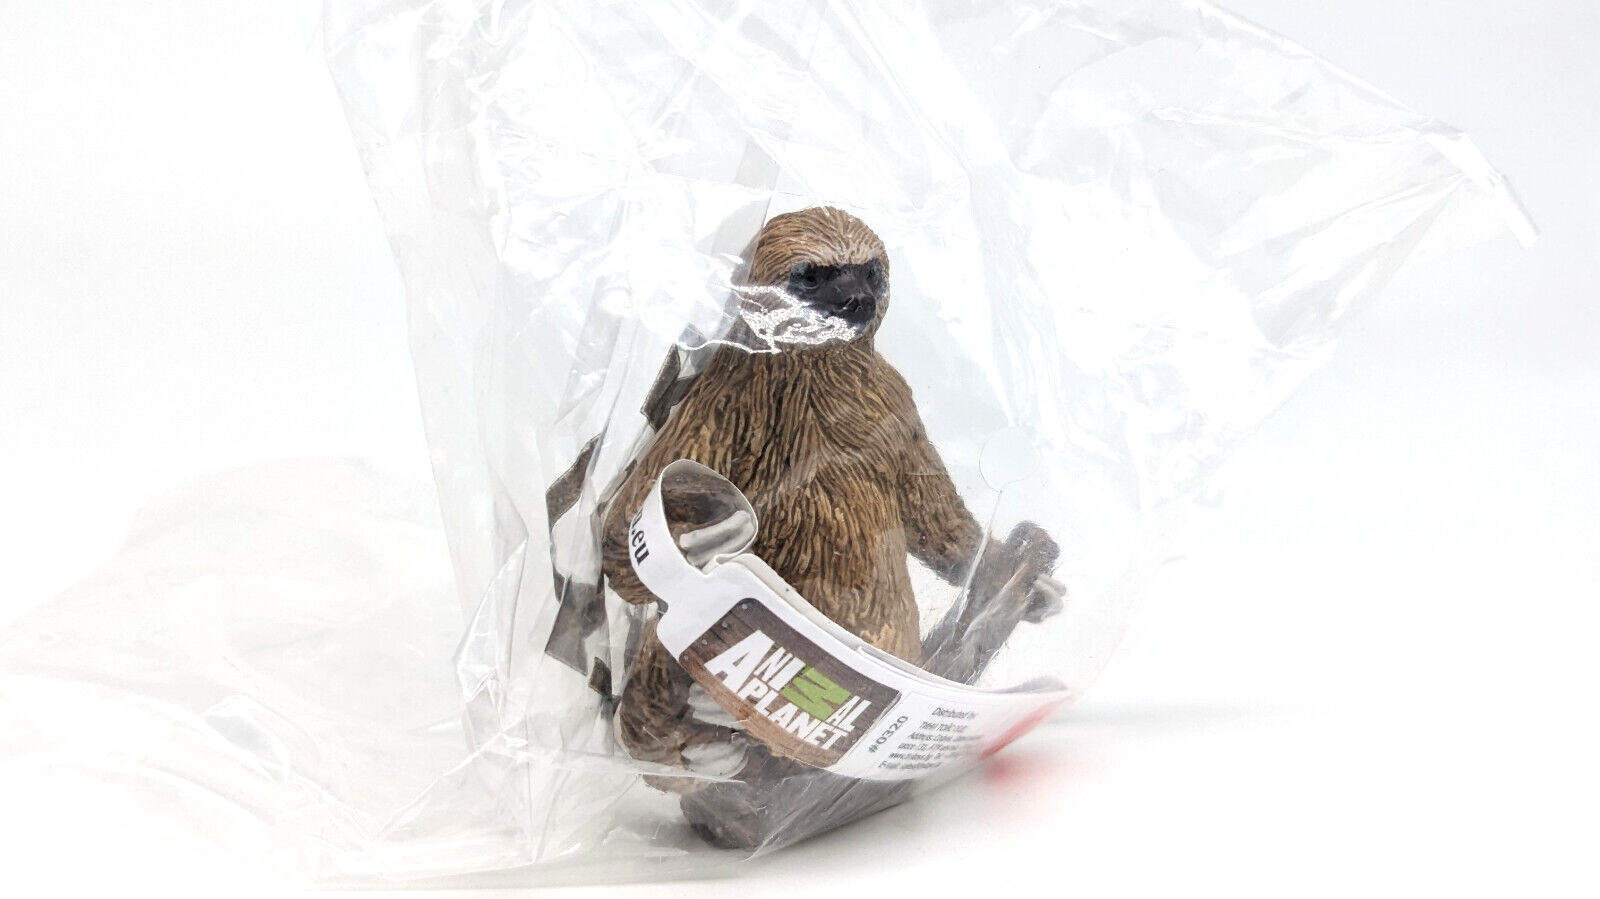 Mojo Fun/Animal Planet, 387180, Two Toed Sloth